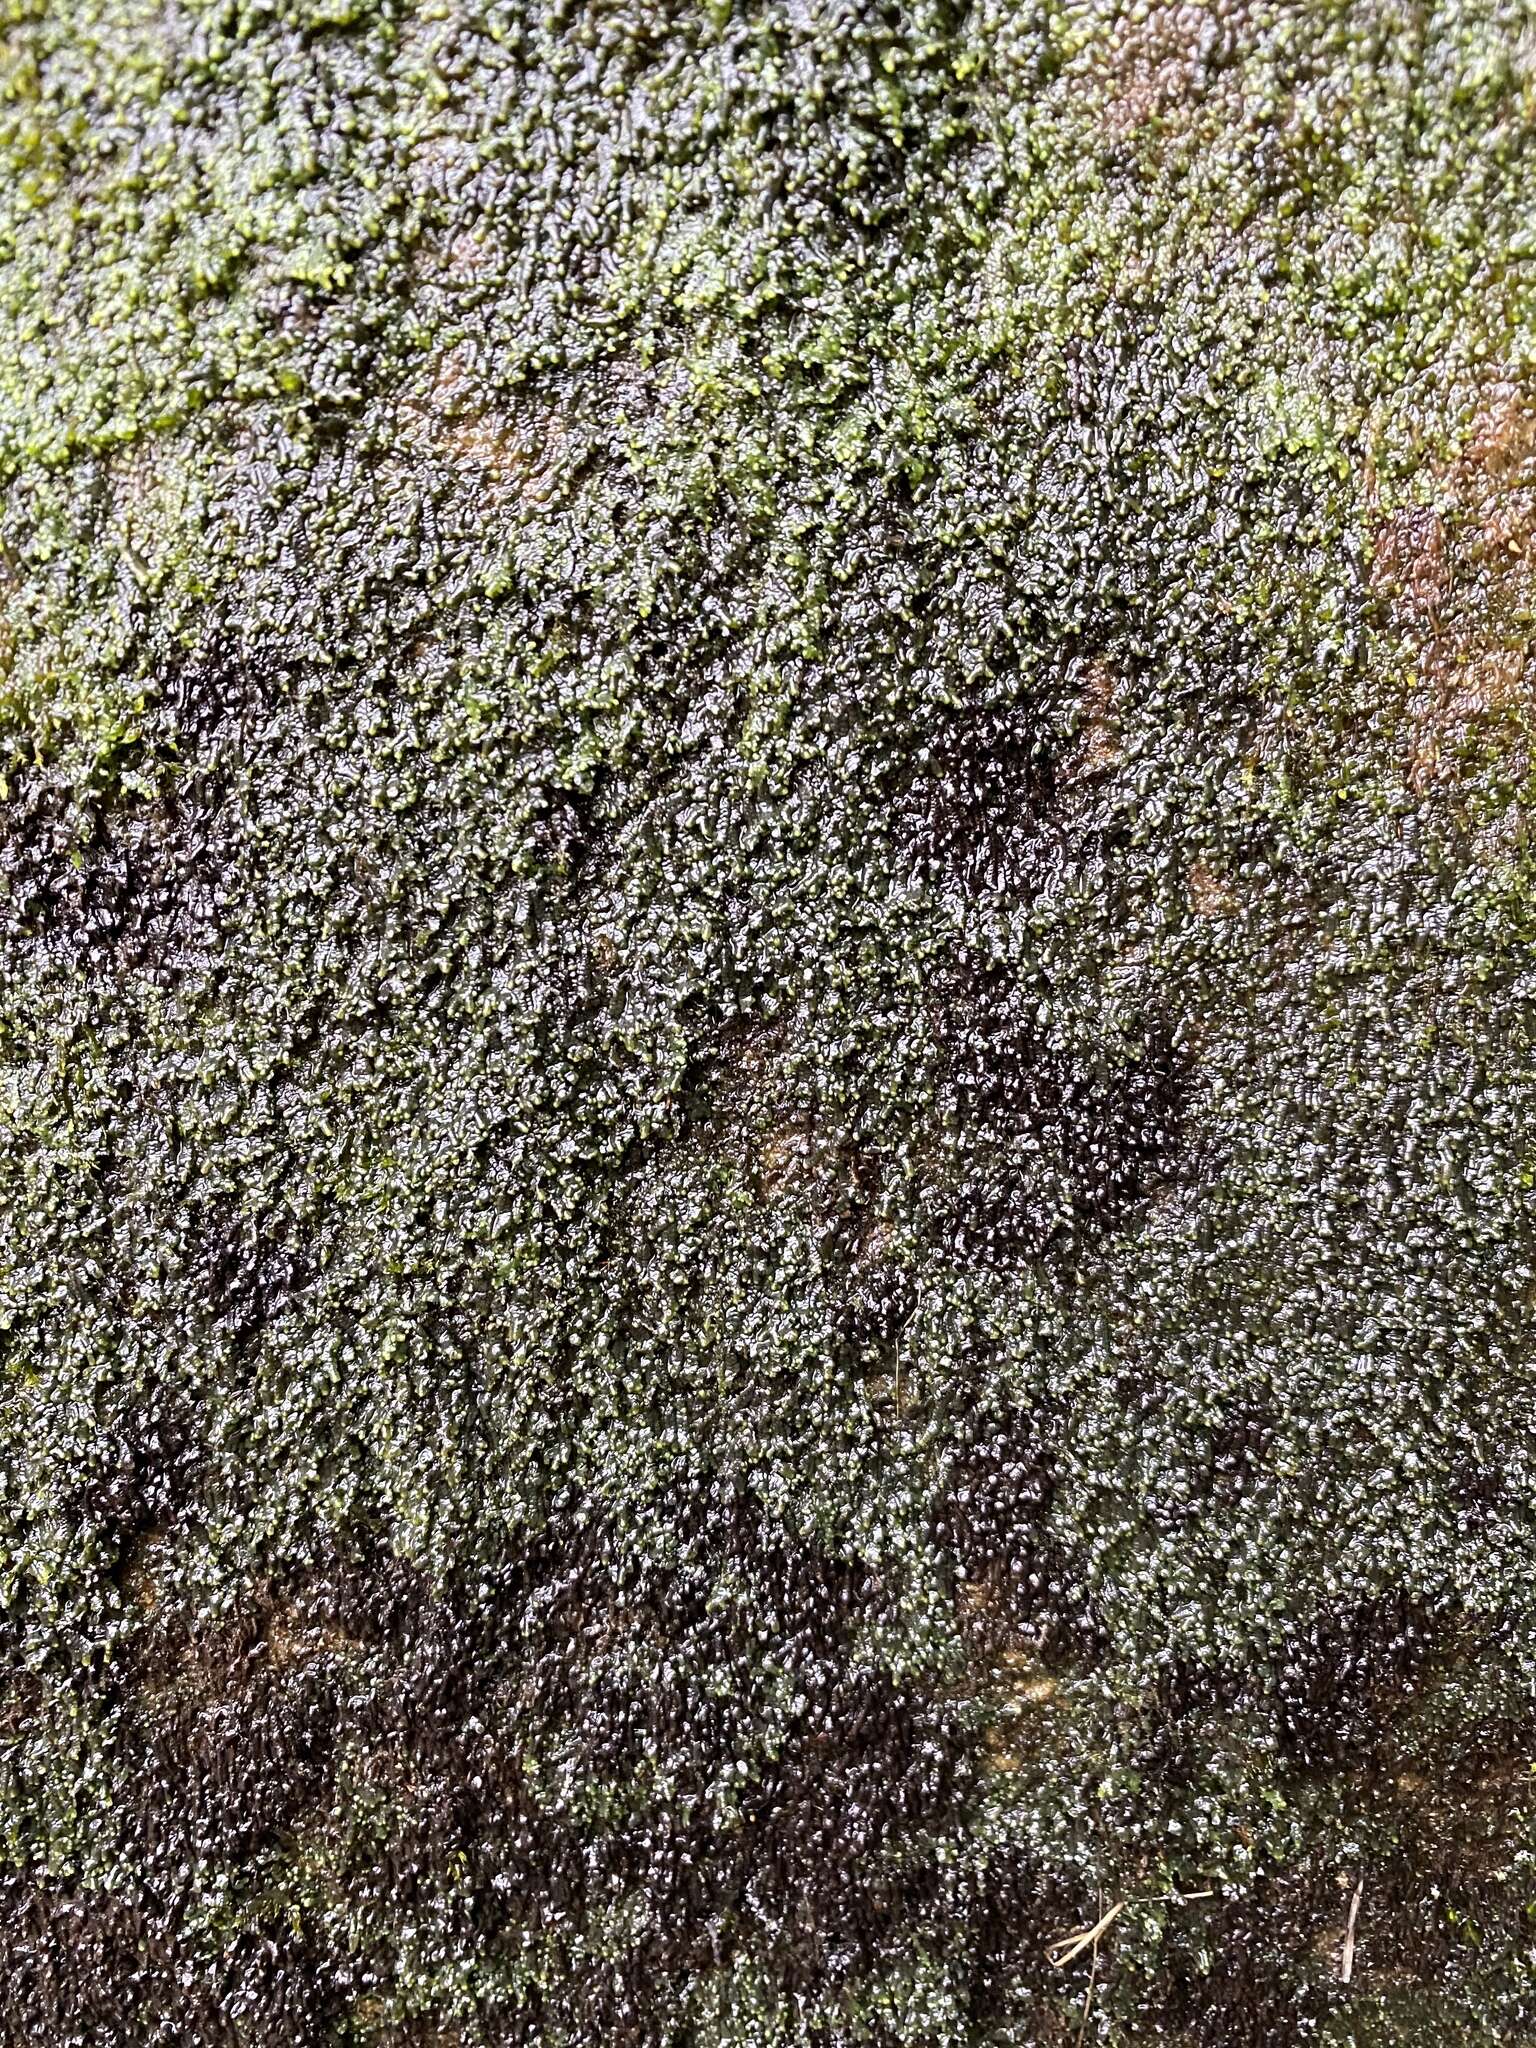 Image of Jubula hutchinsiae subsp. pennsylvanica (Steph.) Verd.